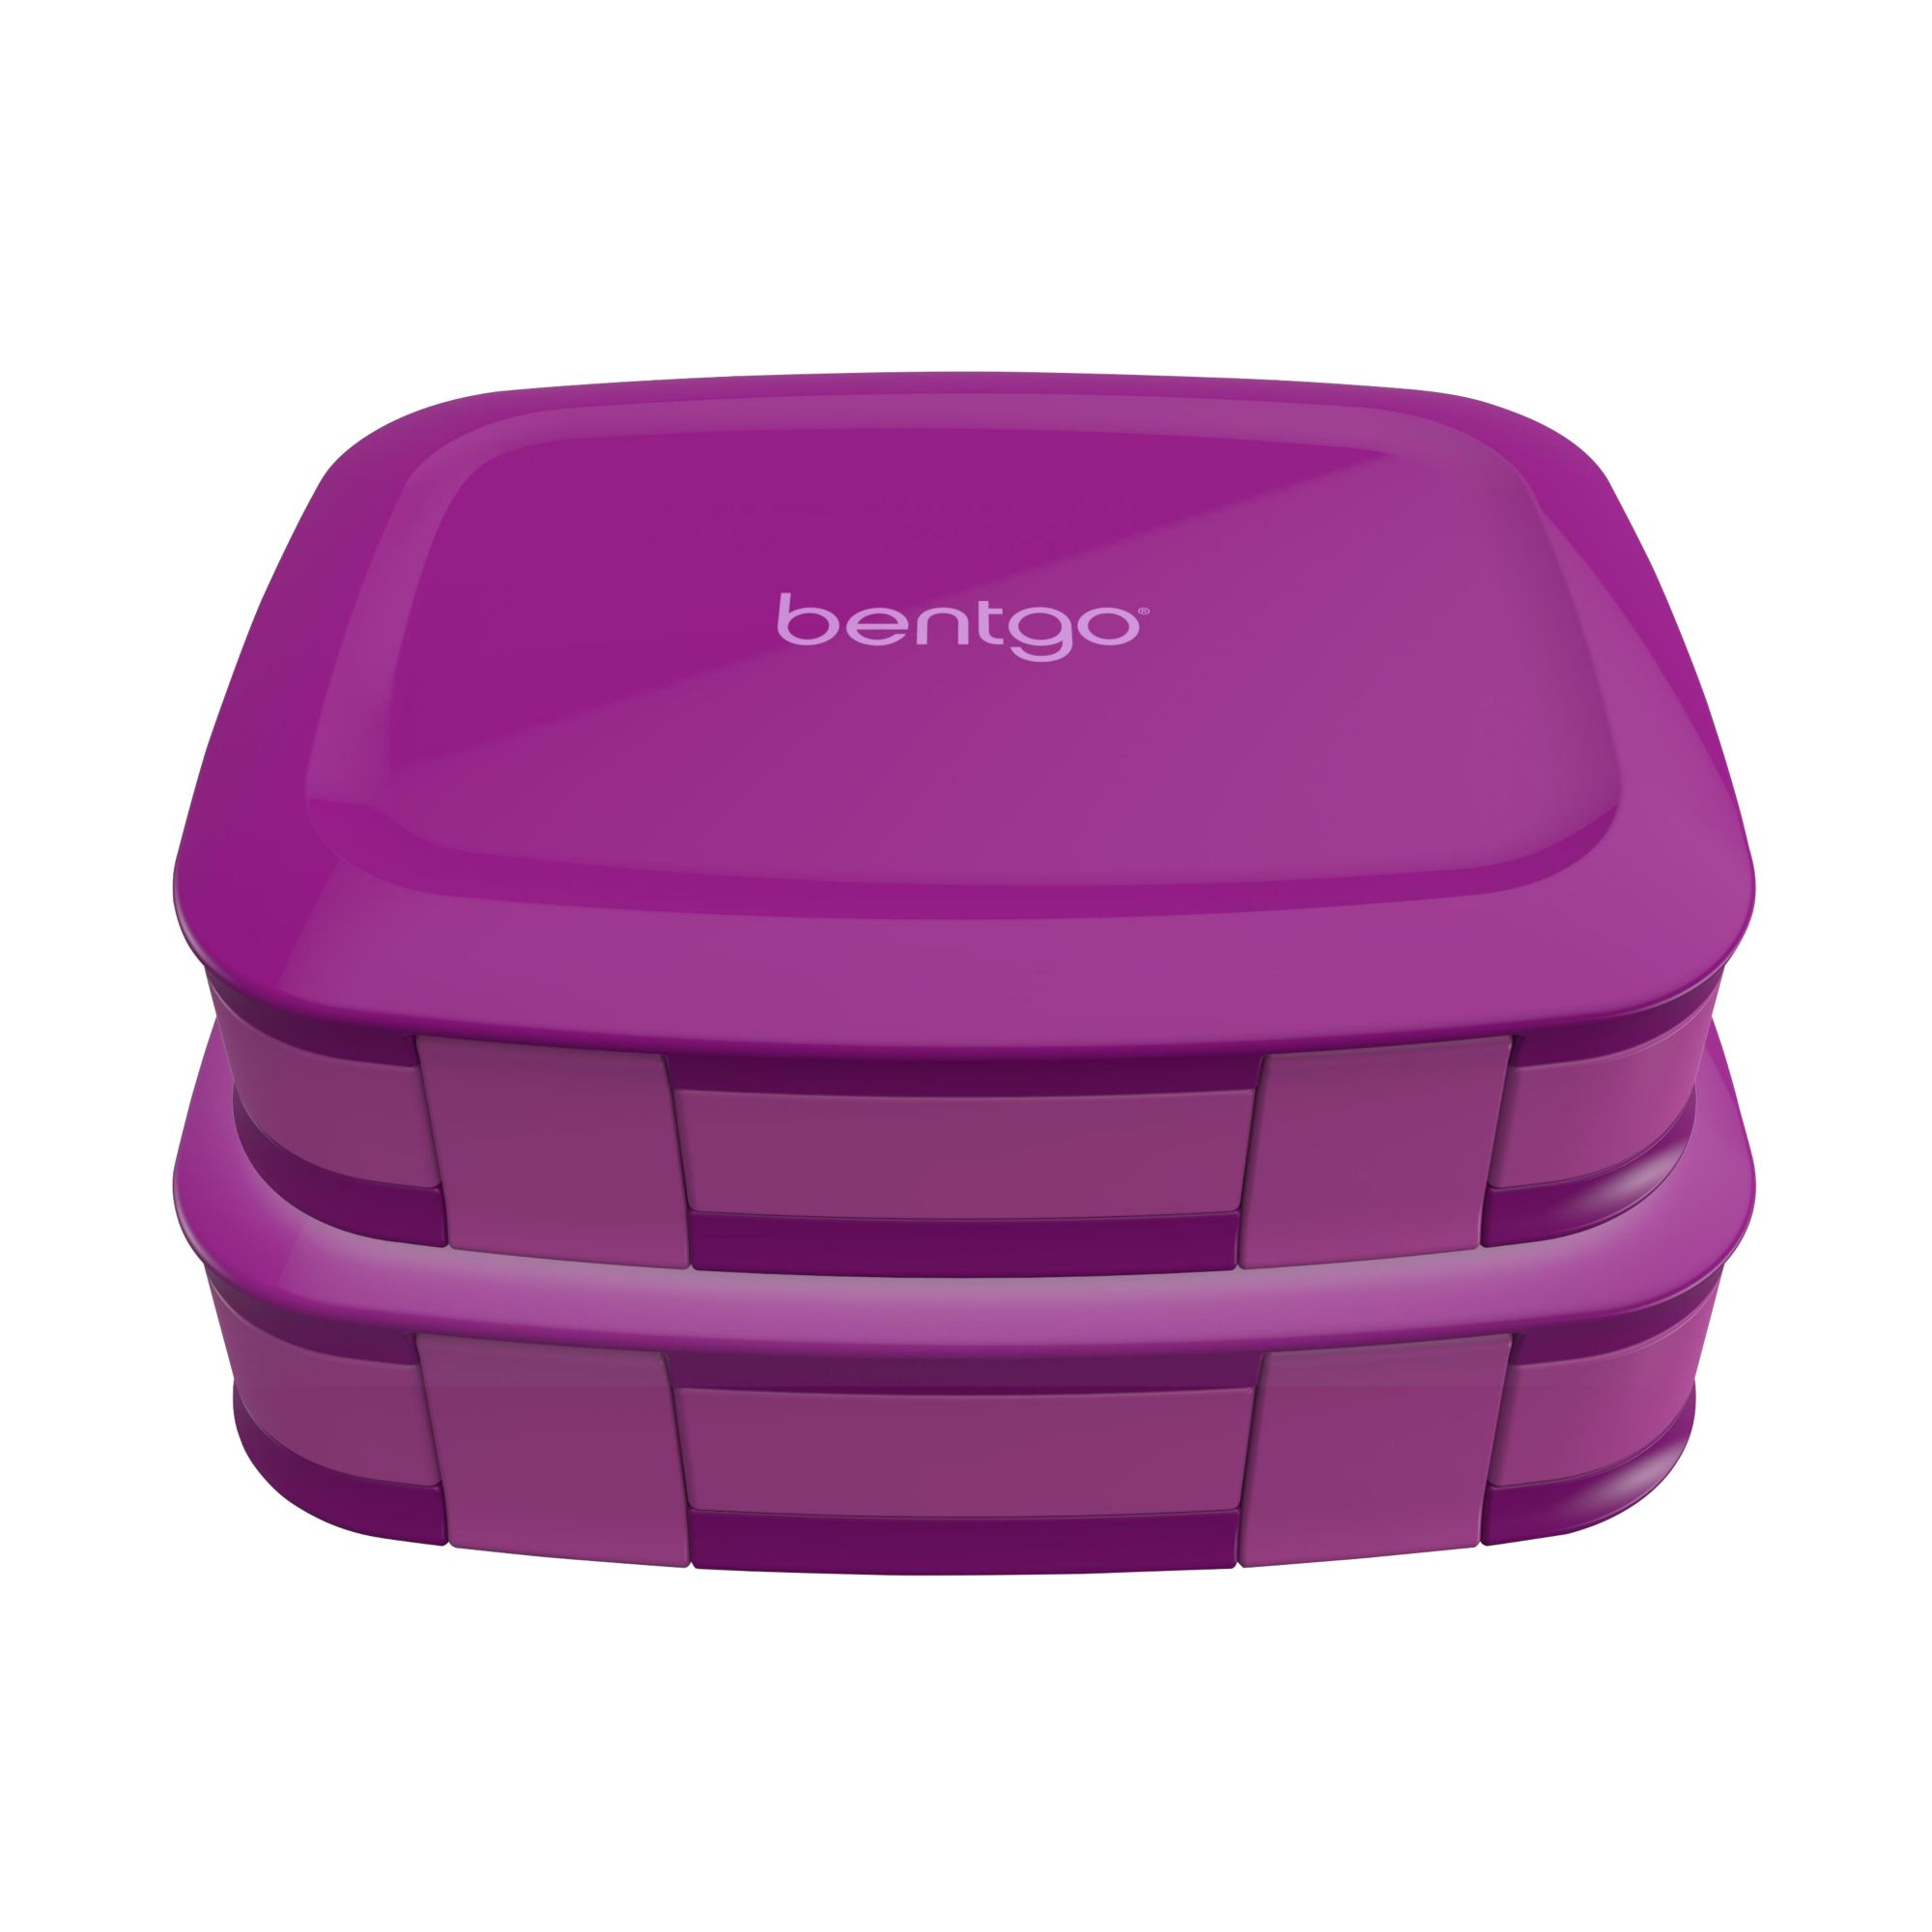 Bentgo Fresh Bento Box Multi Pack, 3-Pack